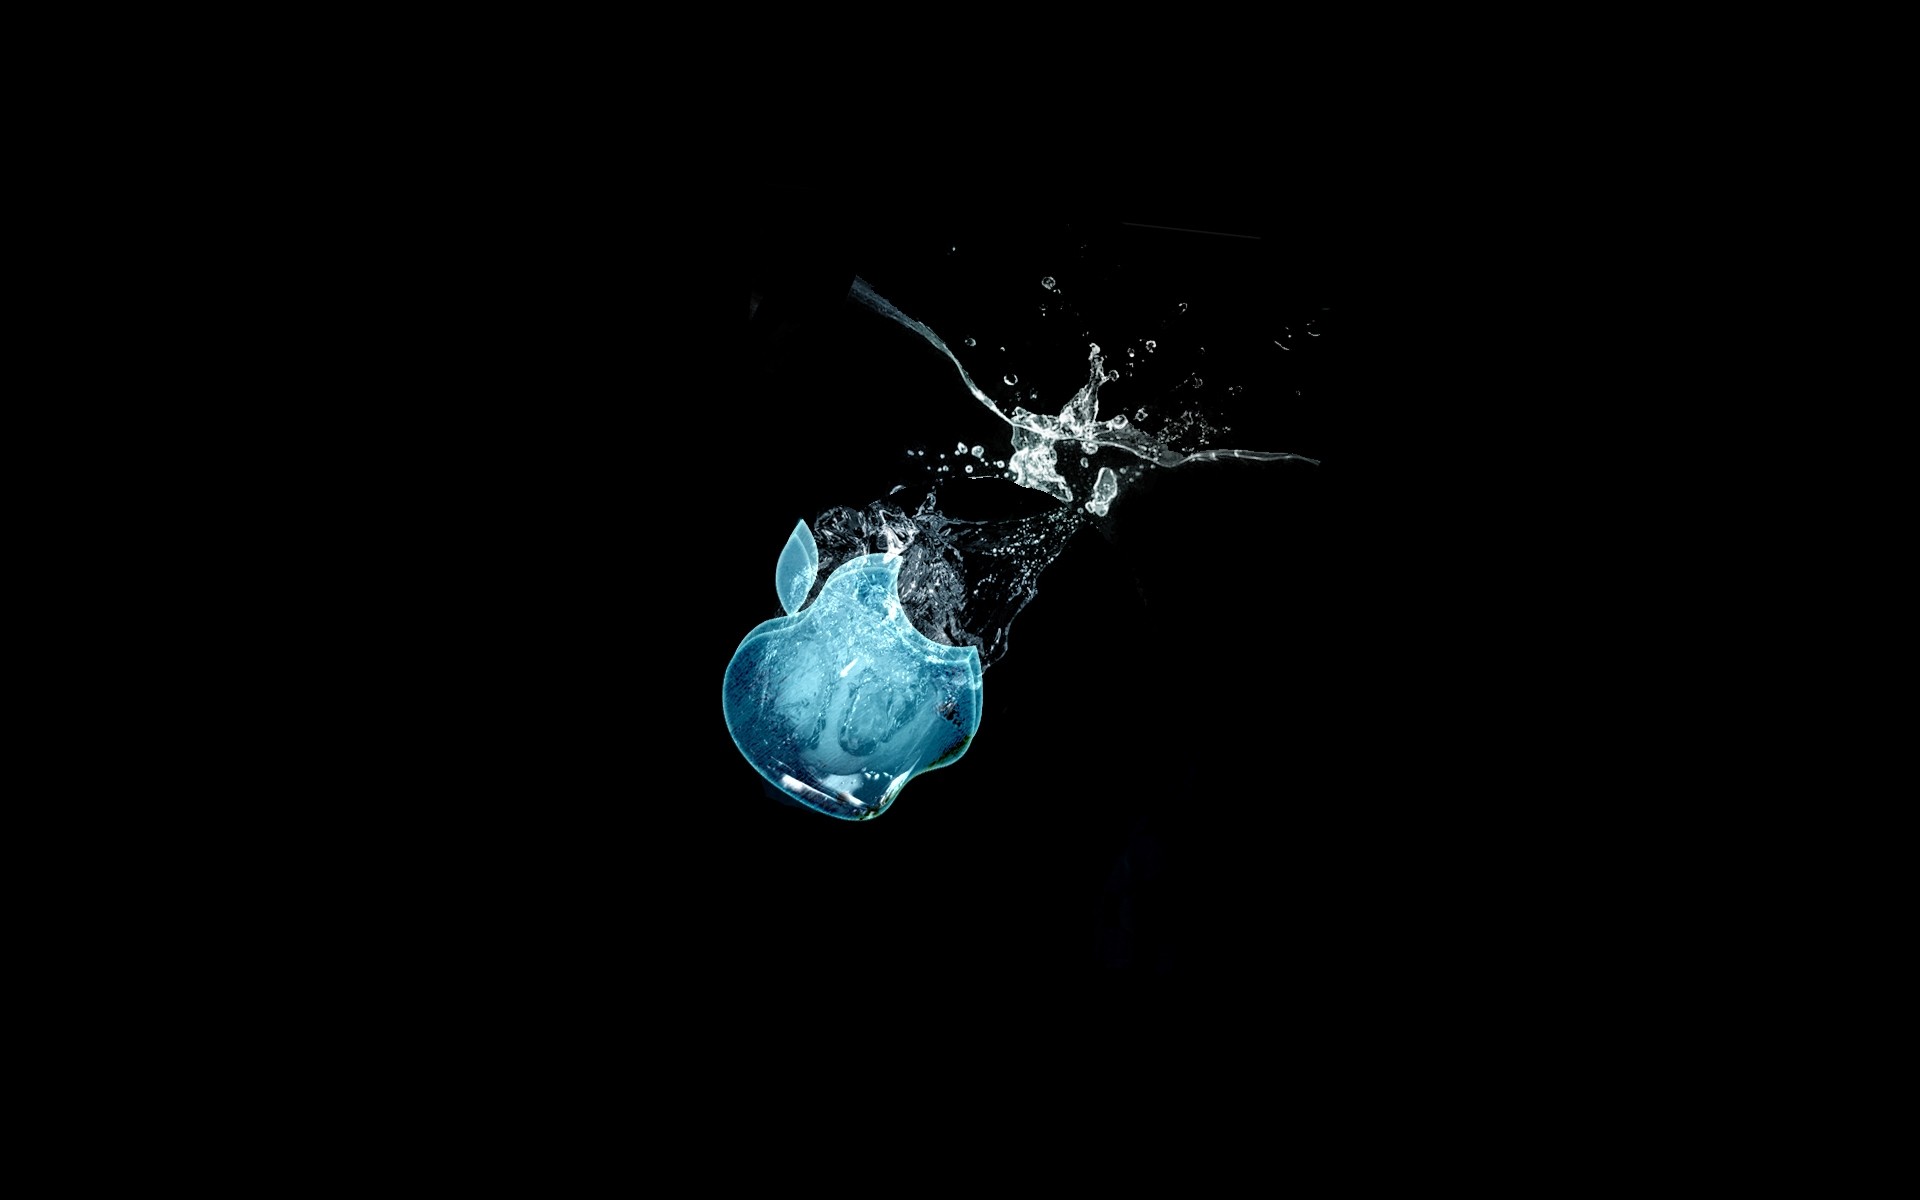 apple splash drop motion water underwater bubble drink wave liquid wet apple logo logo apple design creative design tech